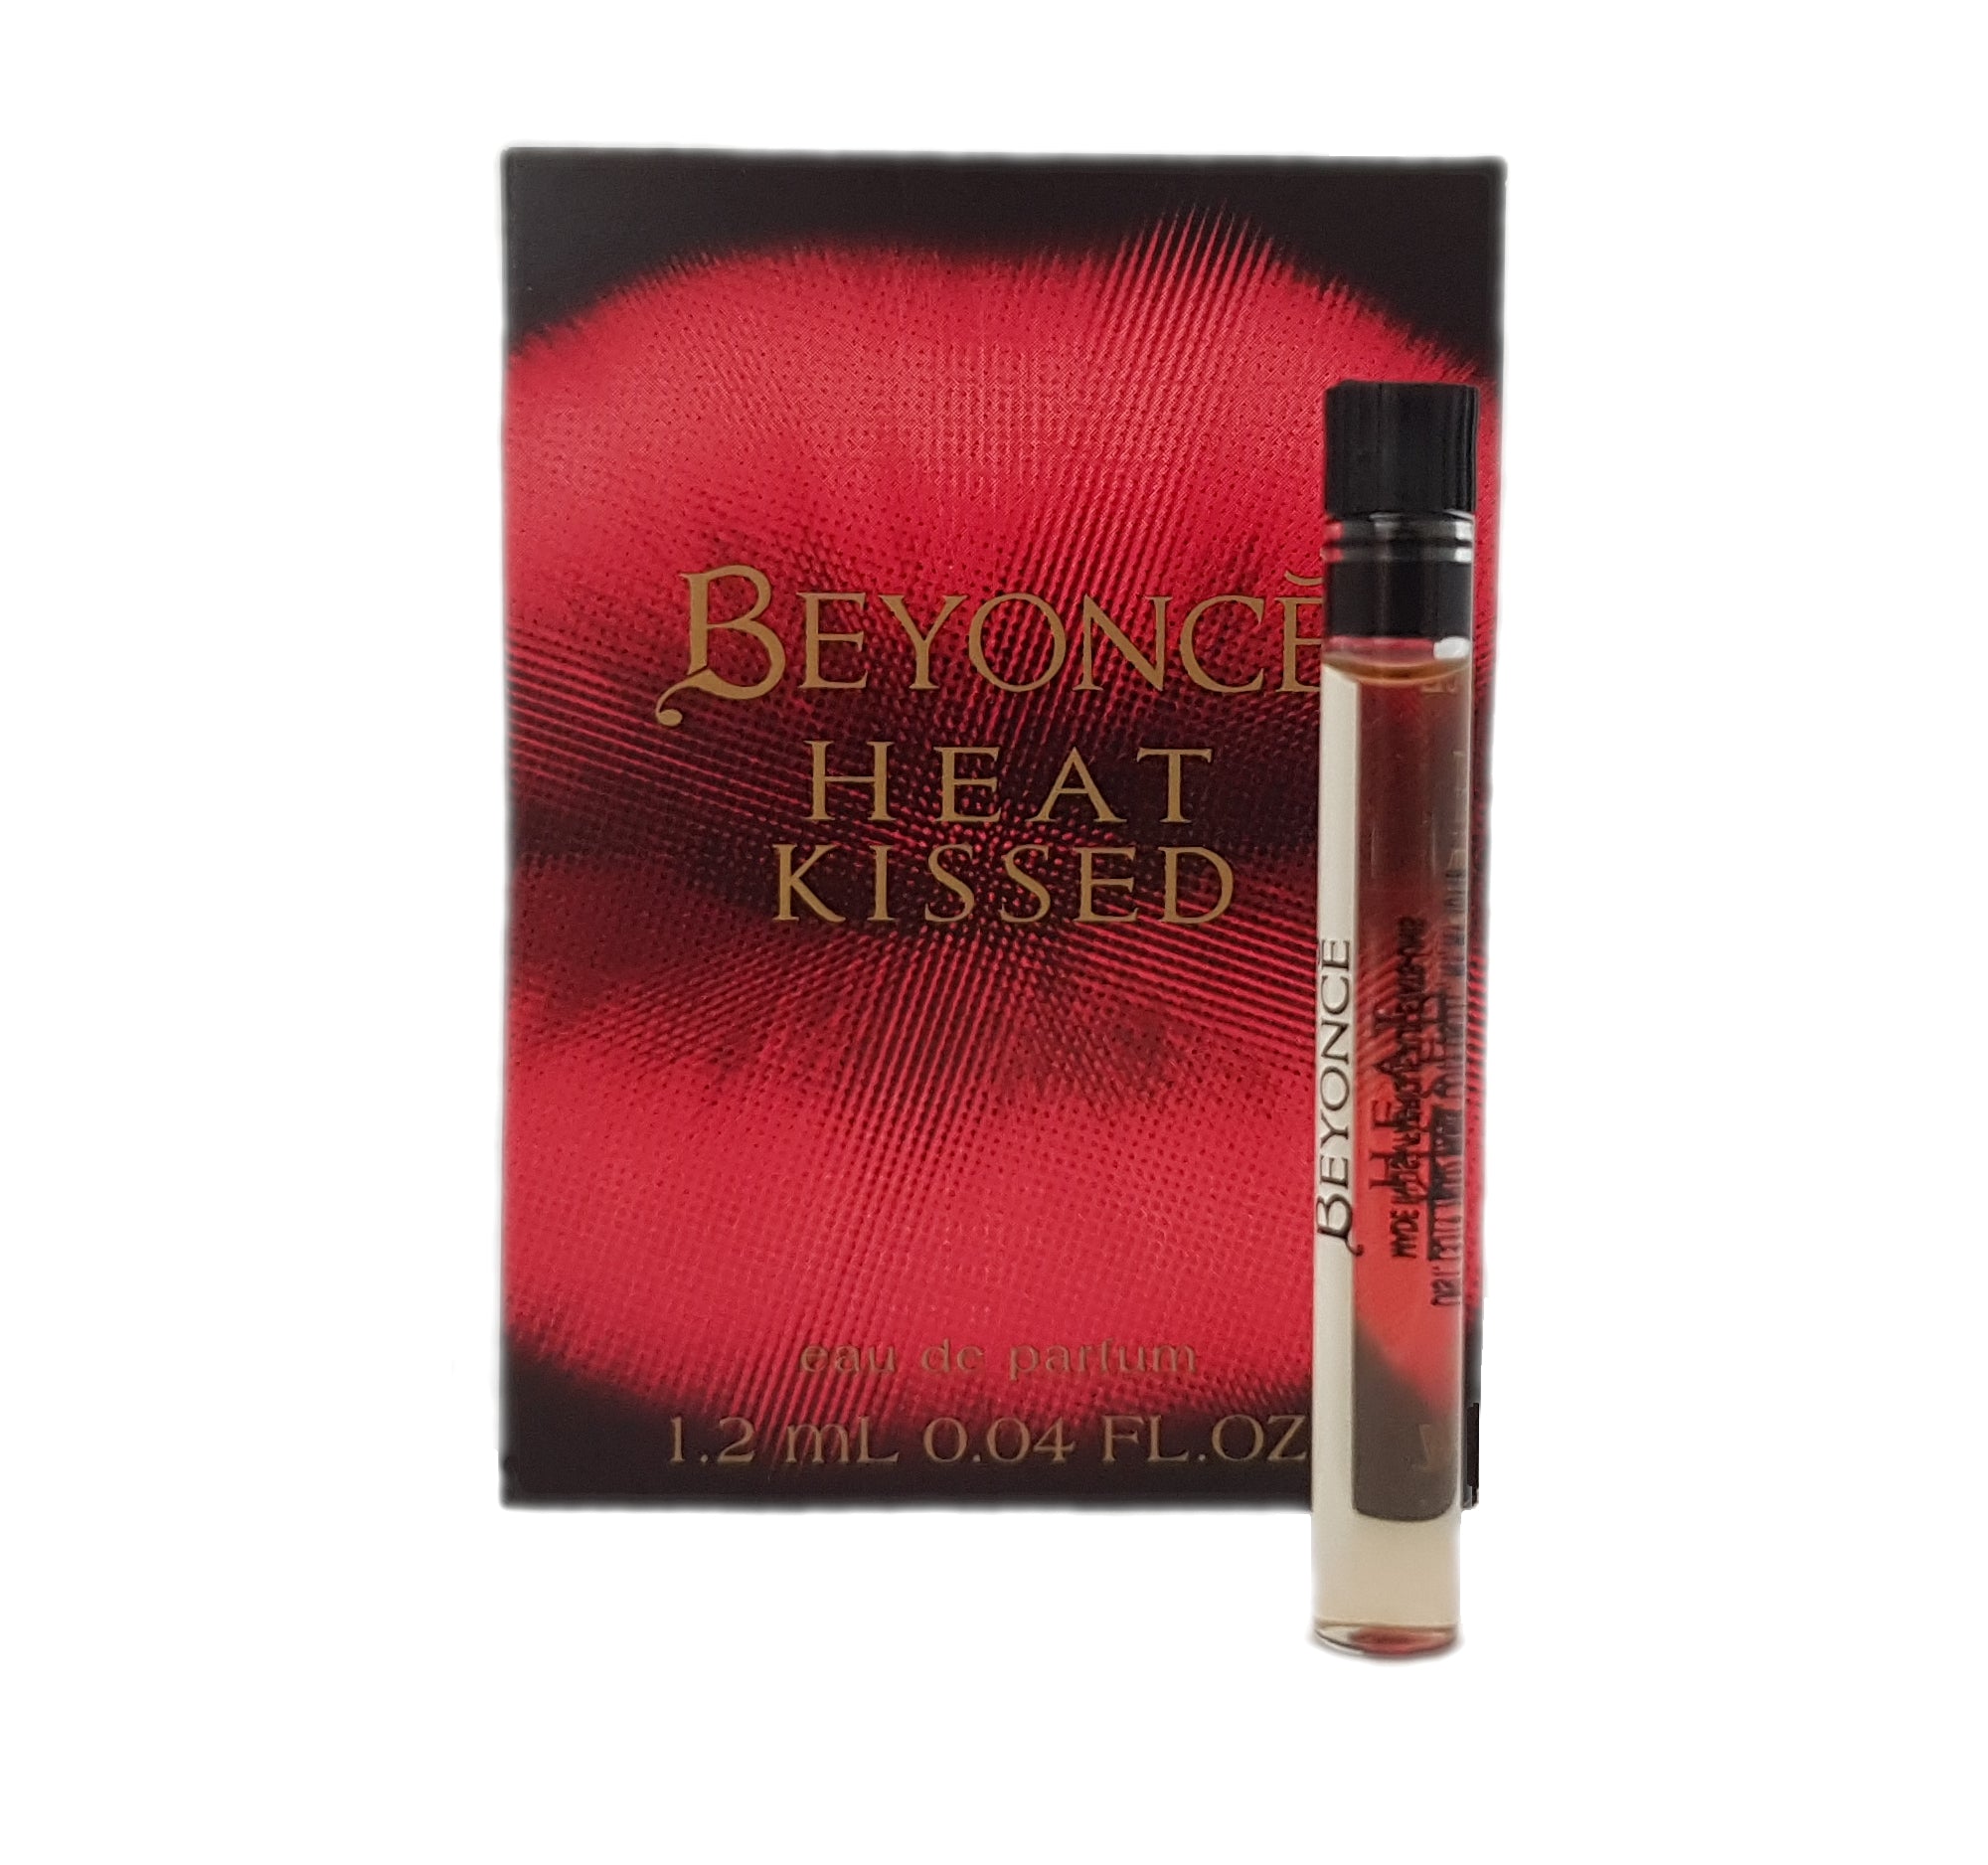 Beyonce Heat Kissed 1.2ml EDP (mini-vial) WOMEN